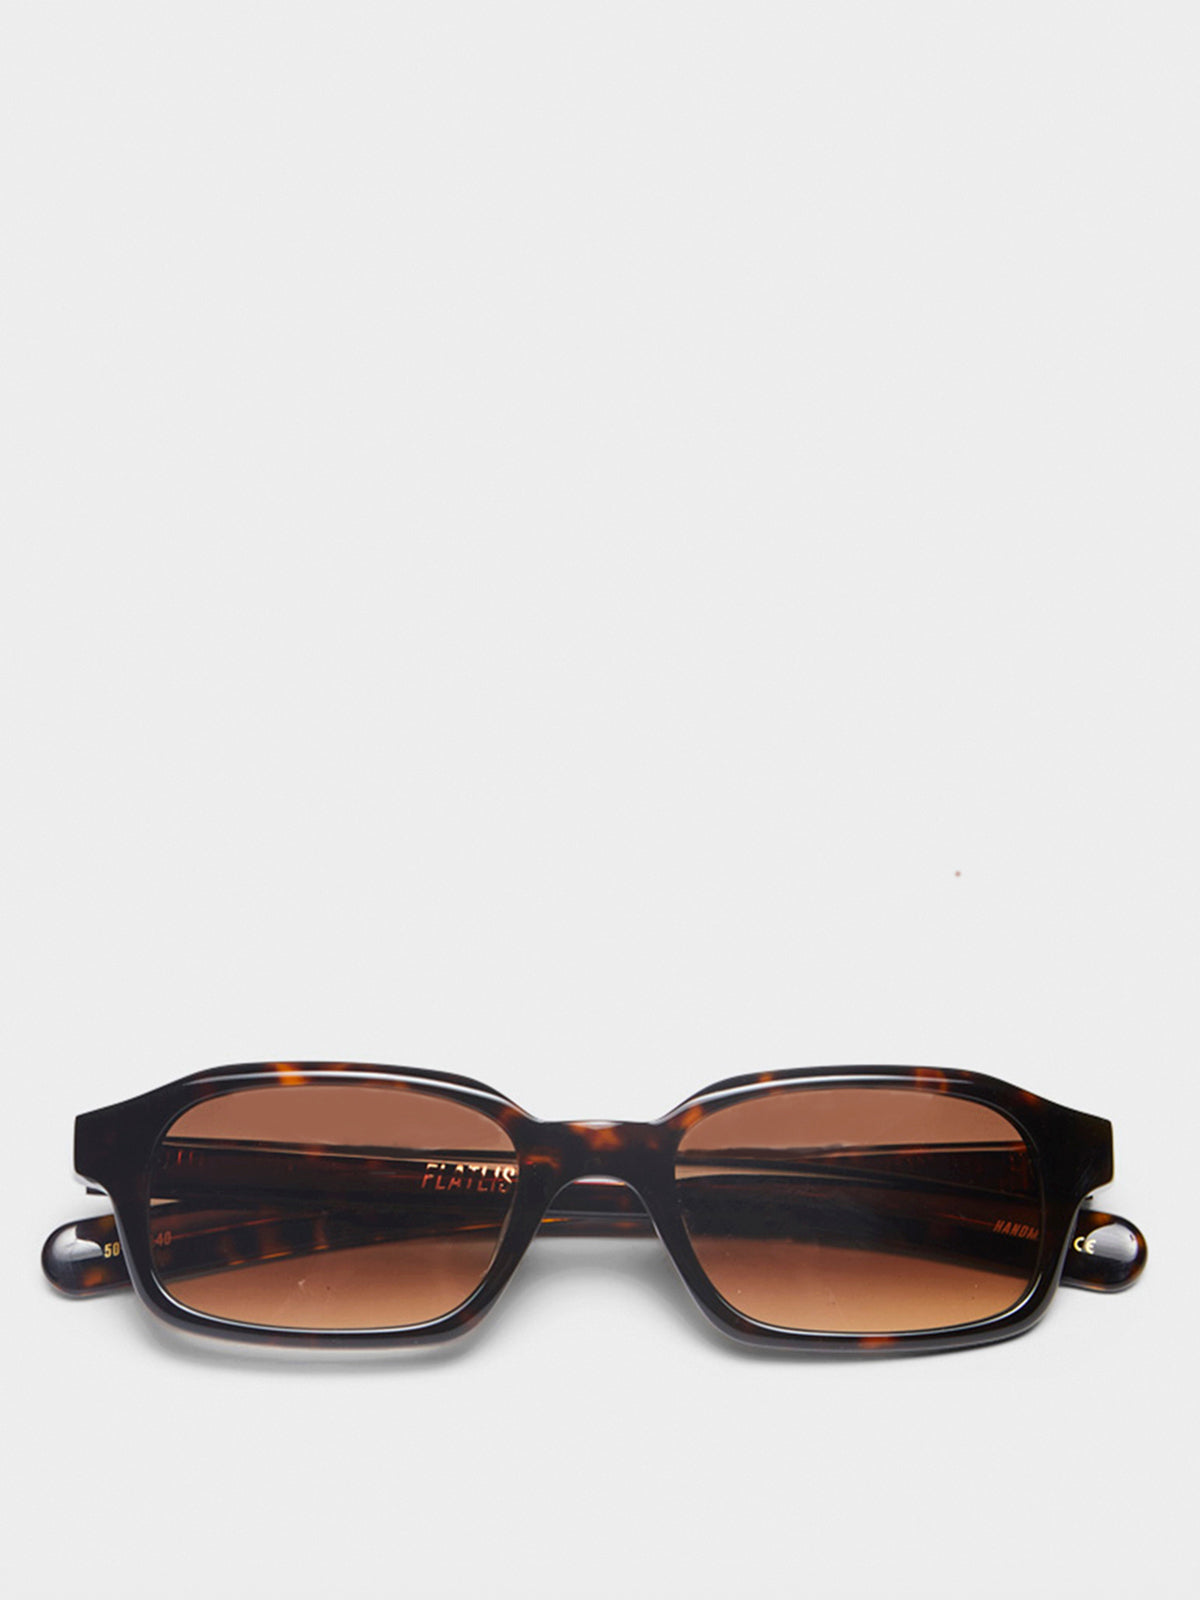 Hanky Sunglasses in Brown